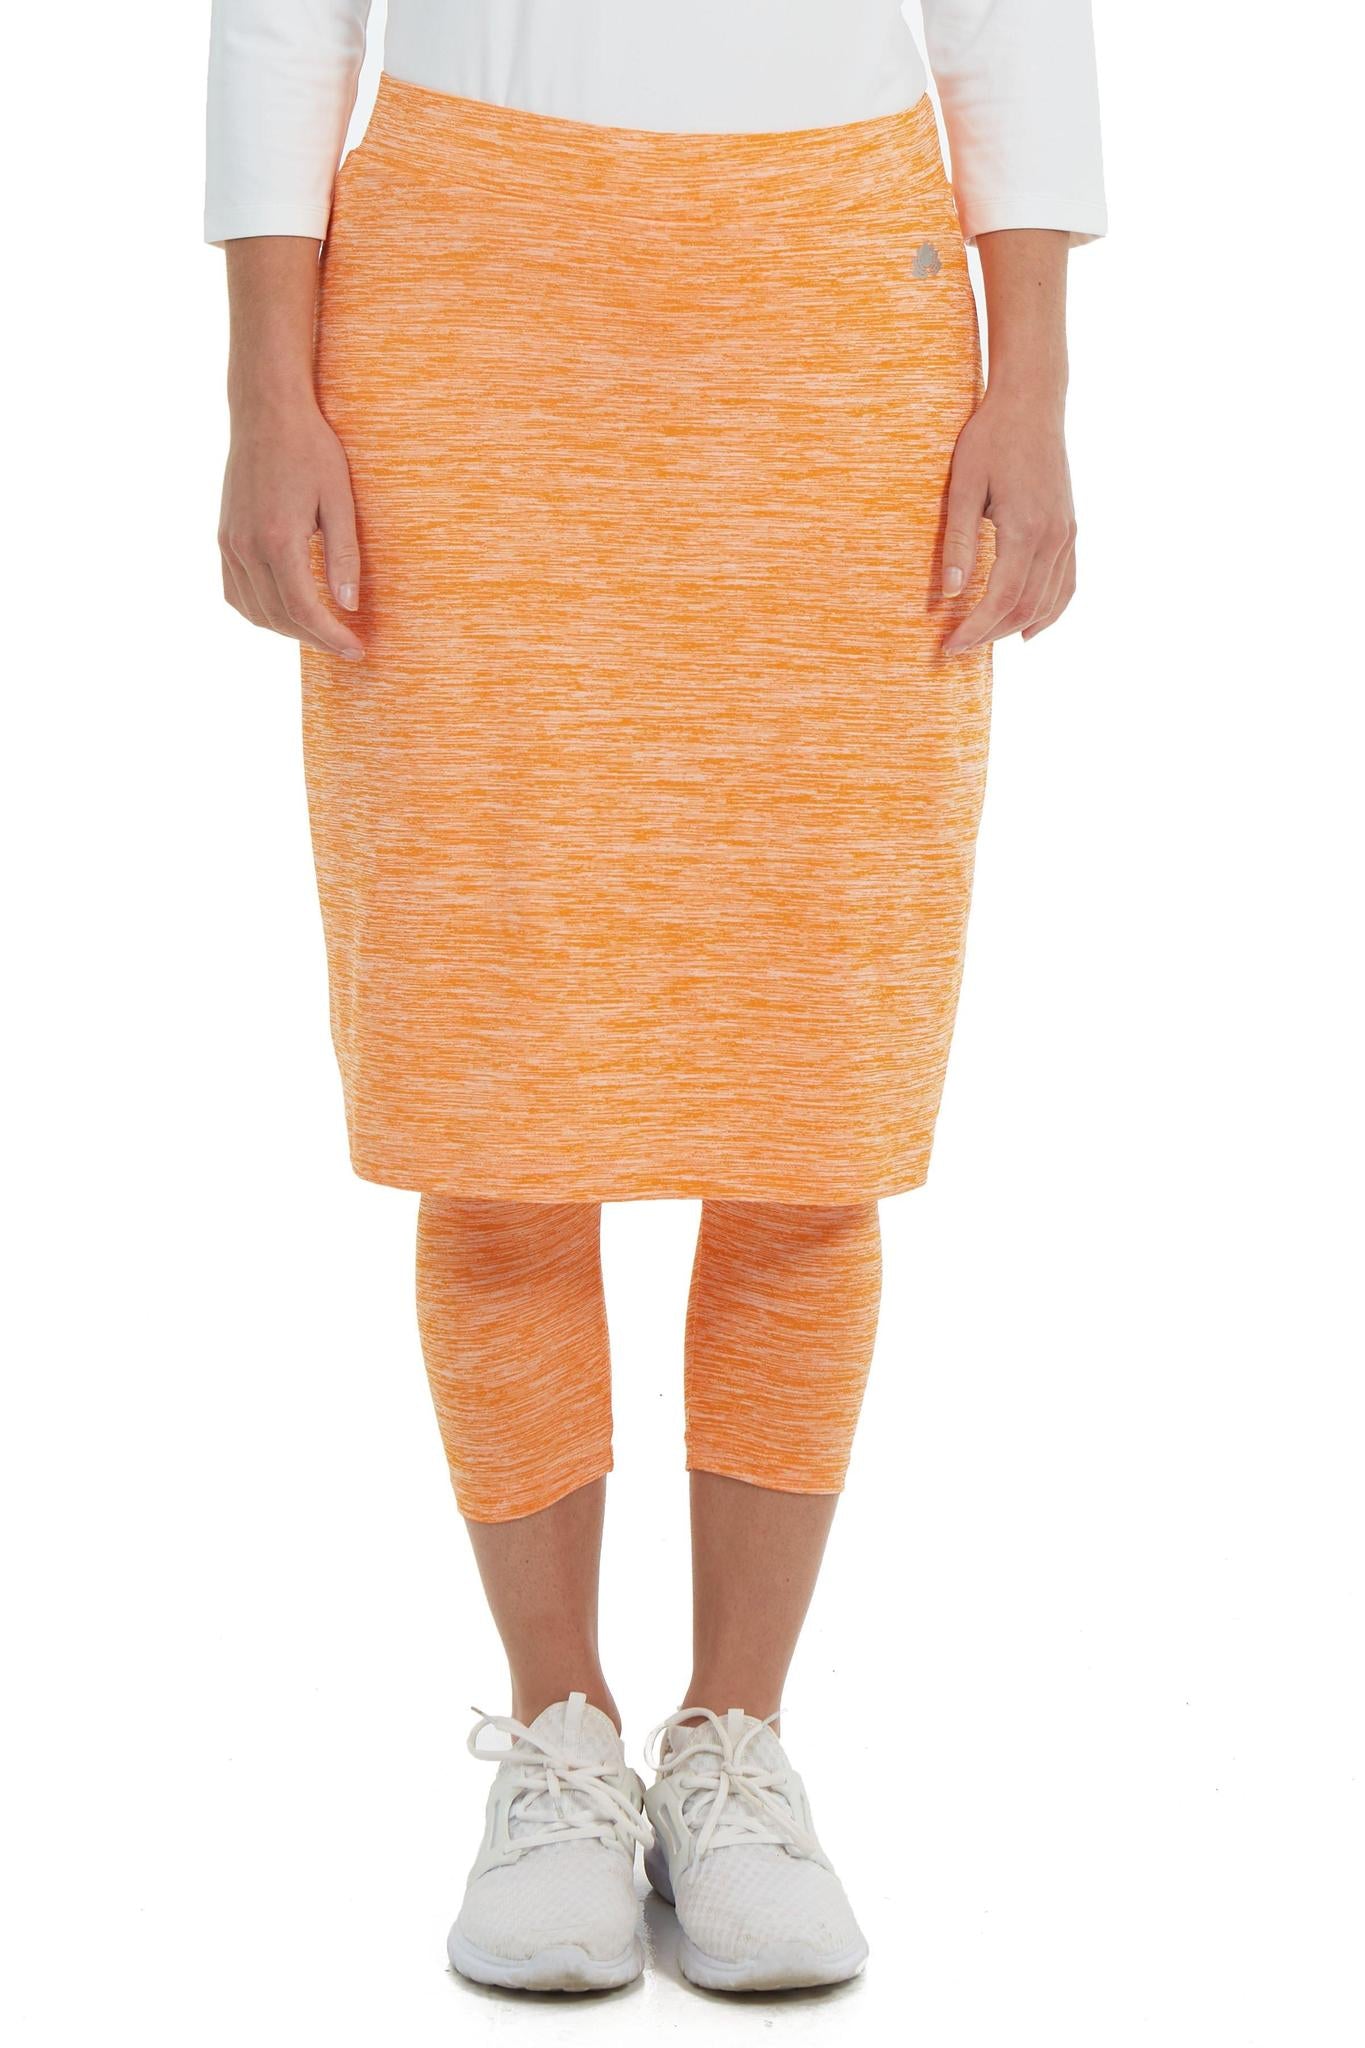 SpaceDye Snoga Athletic Skirt in Orange Slush – Jupe De Abby